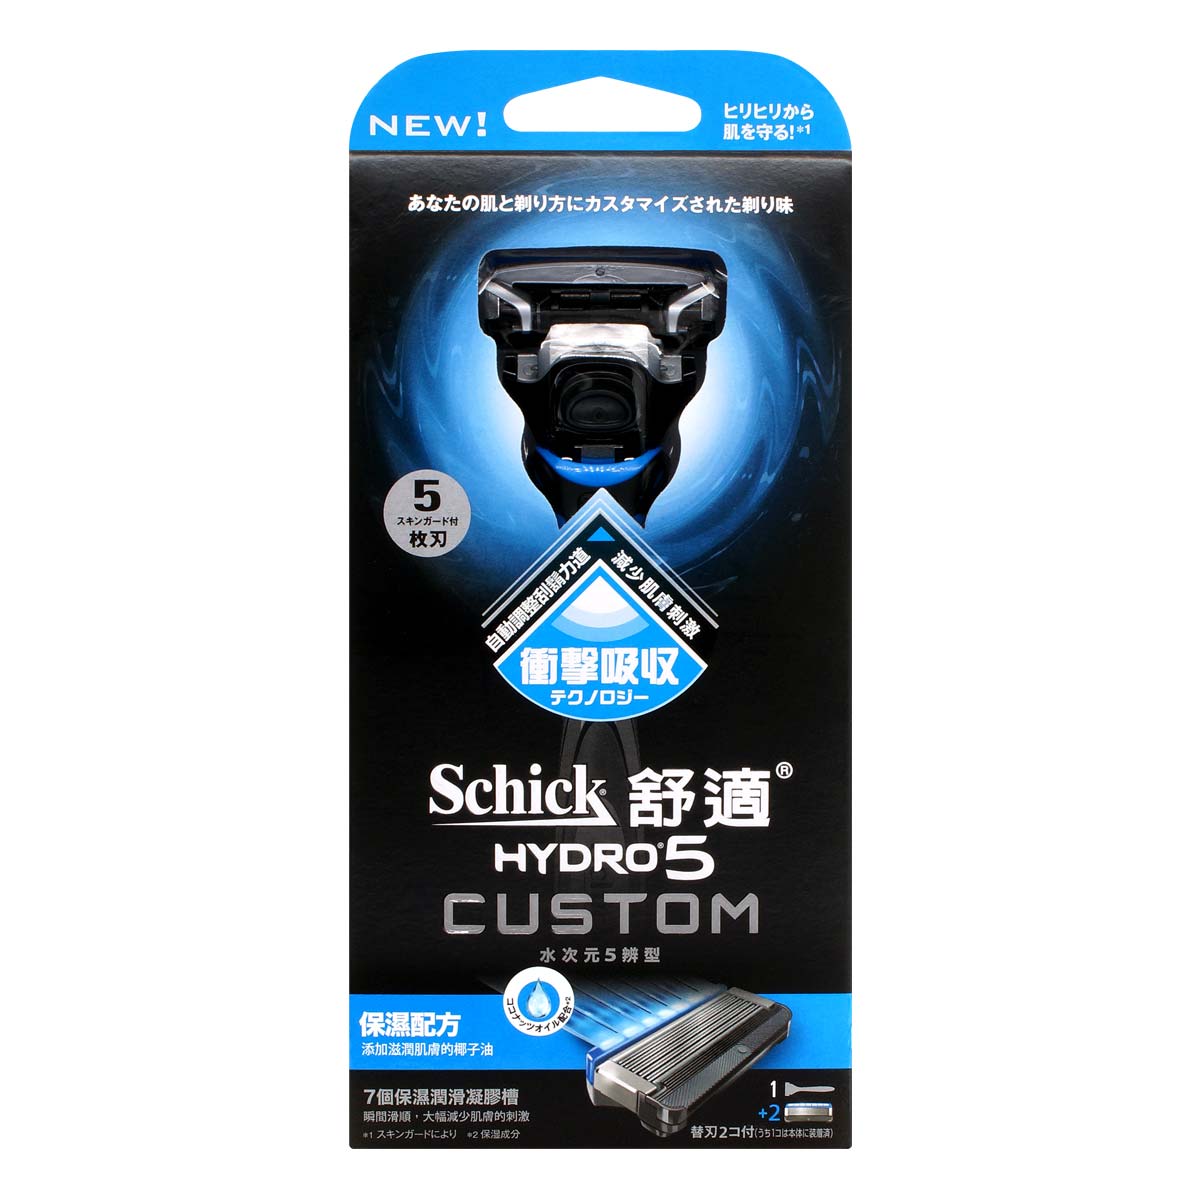 Schick Hydro5 Custom Hydrate Kit (1 razor with 2 blades)-p_2